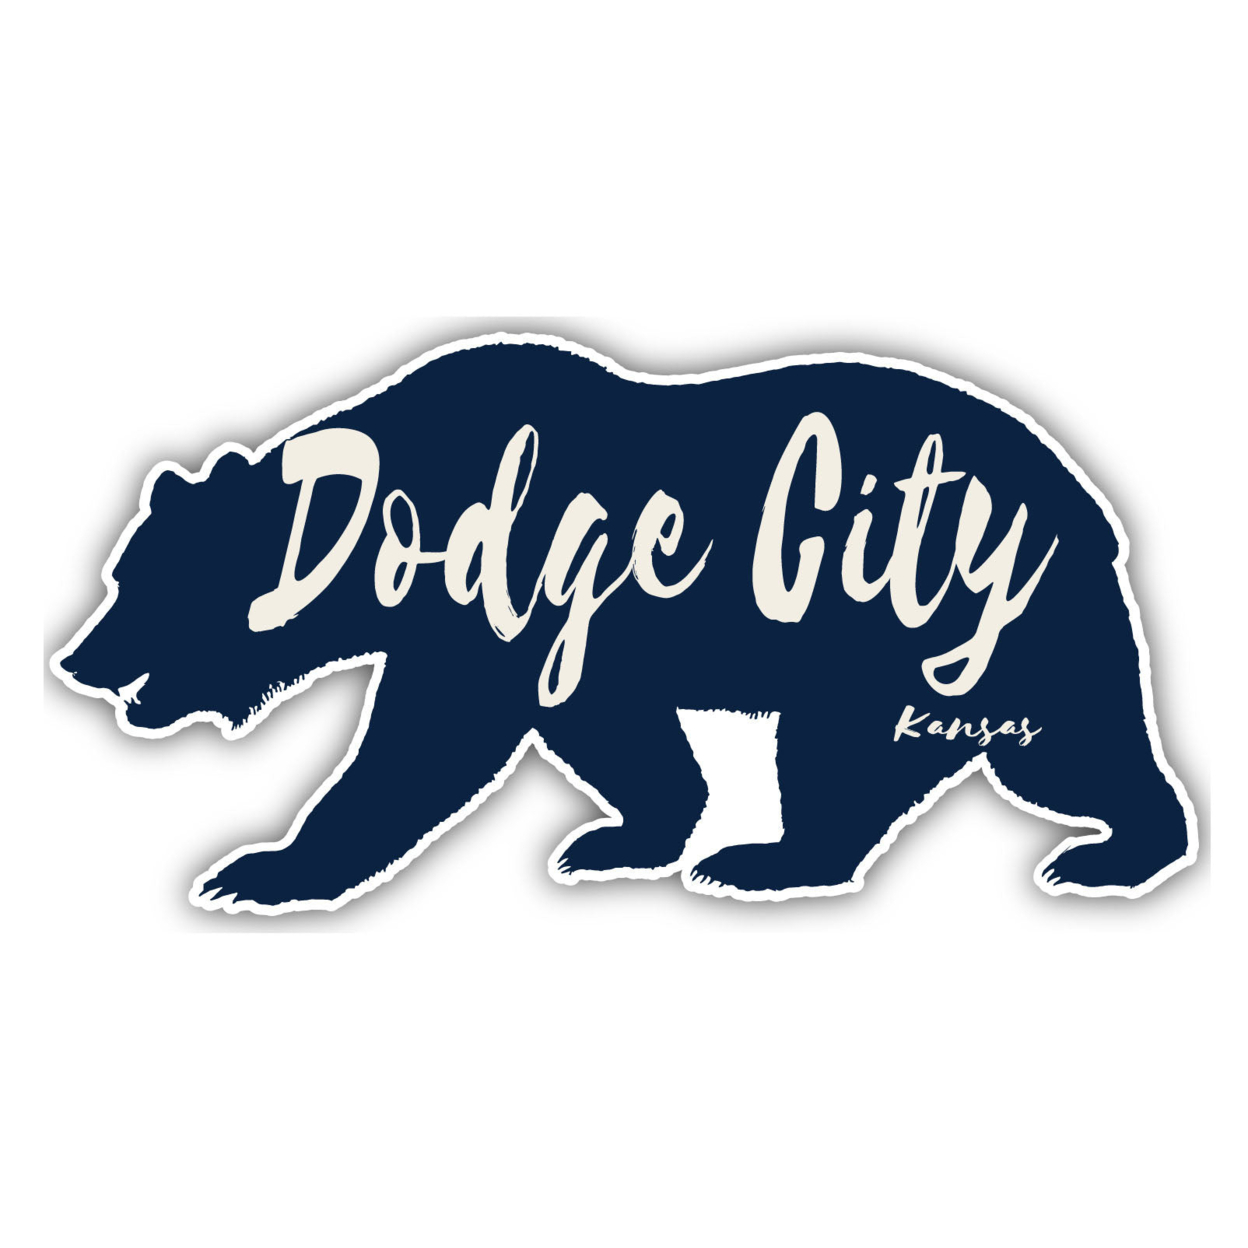 Dodge City Kansas Souvenir Decorative Stickers (Choose Theme And Size) - Single Unit, 10-Inch, Adventures Awaits